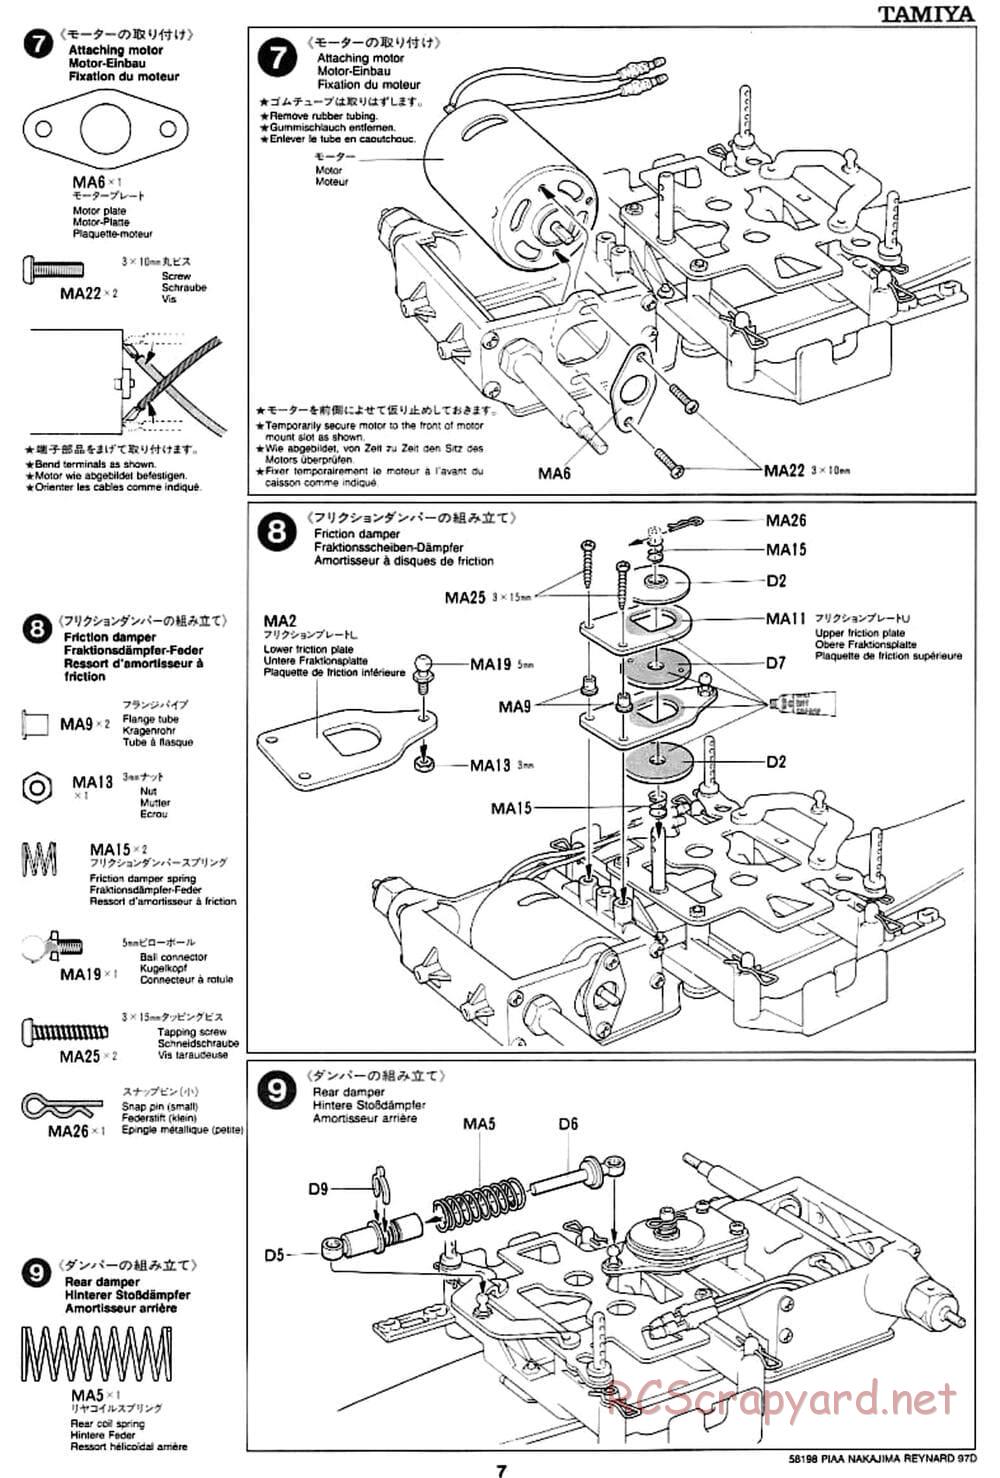 Tamiya - PIAA Nakajima Reynard 97D - F103 Chassis - Manuale - Page 7